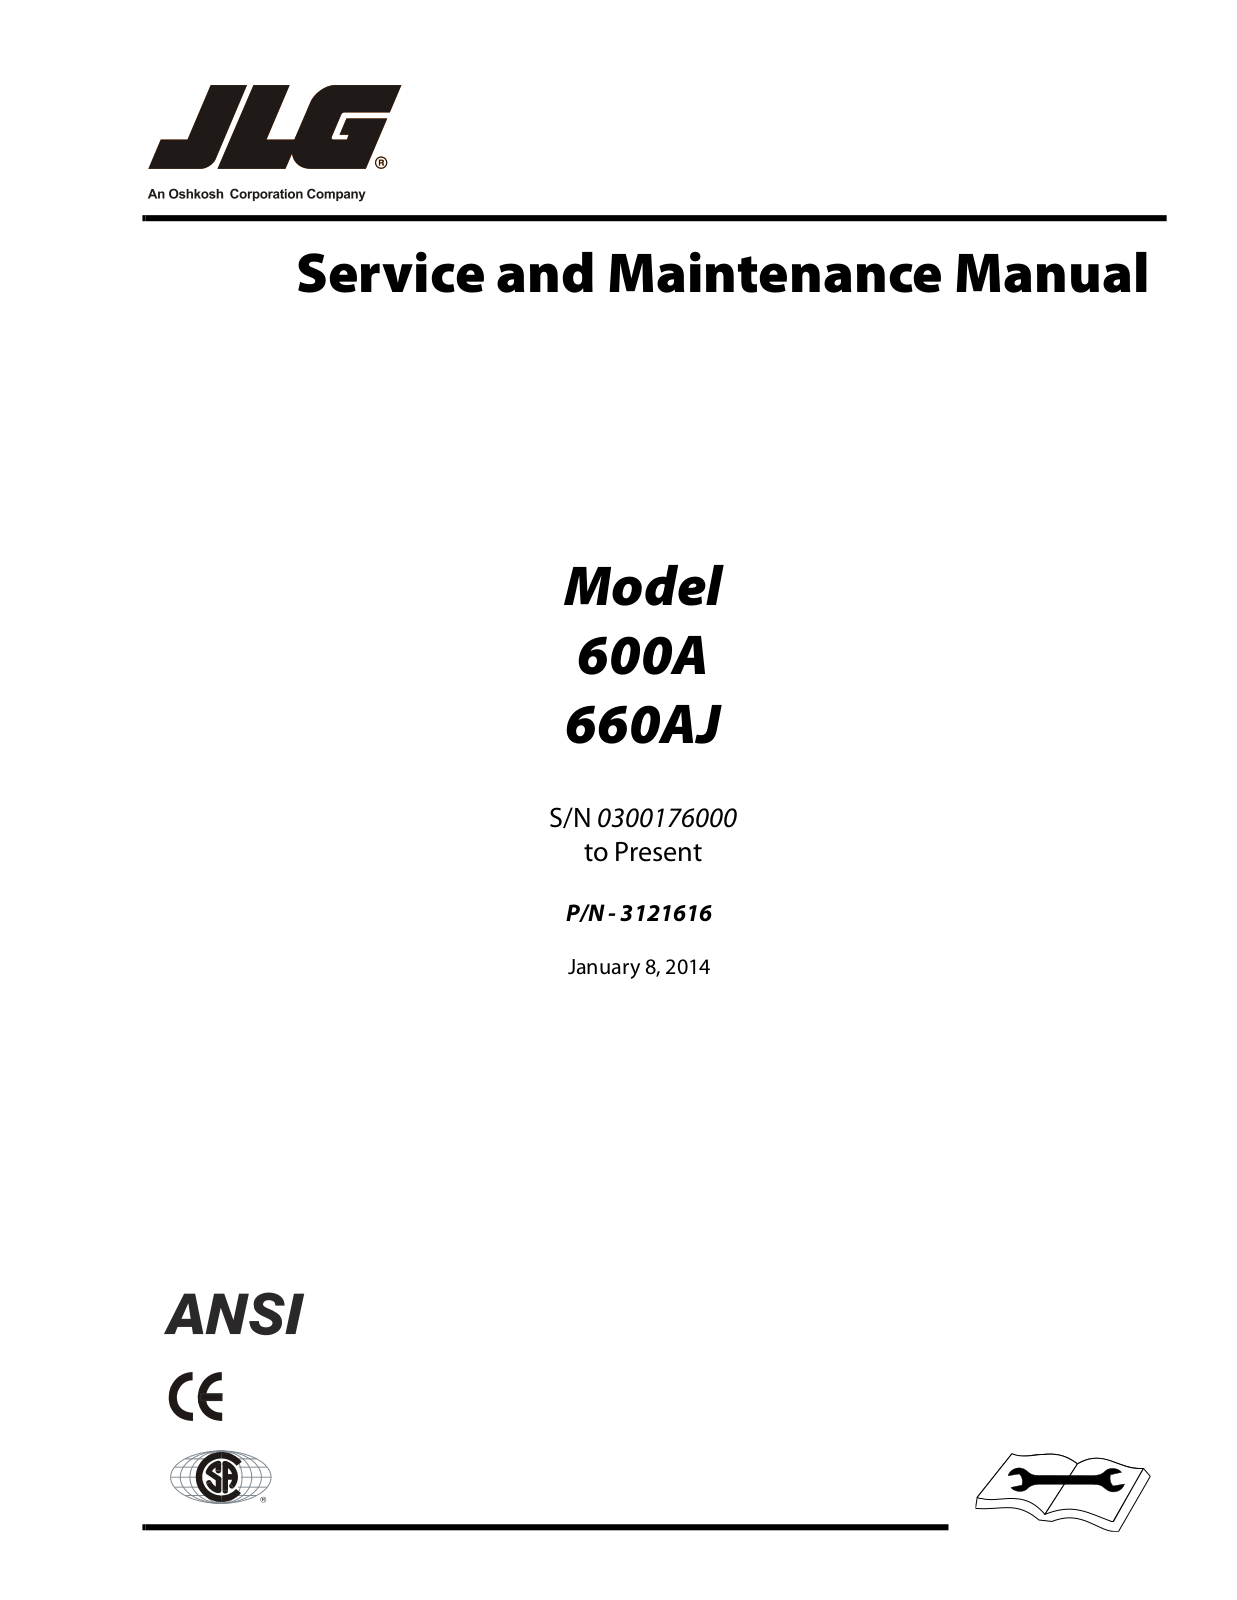 JLG 660AJ Service Manual